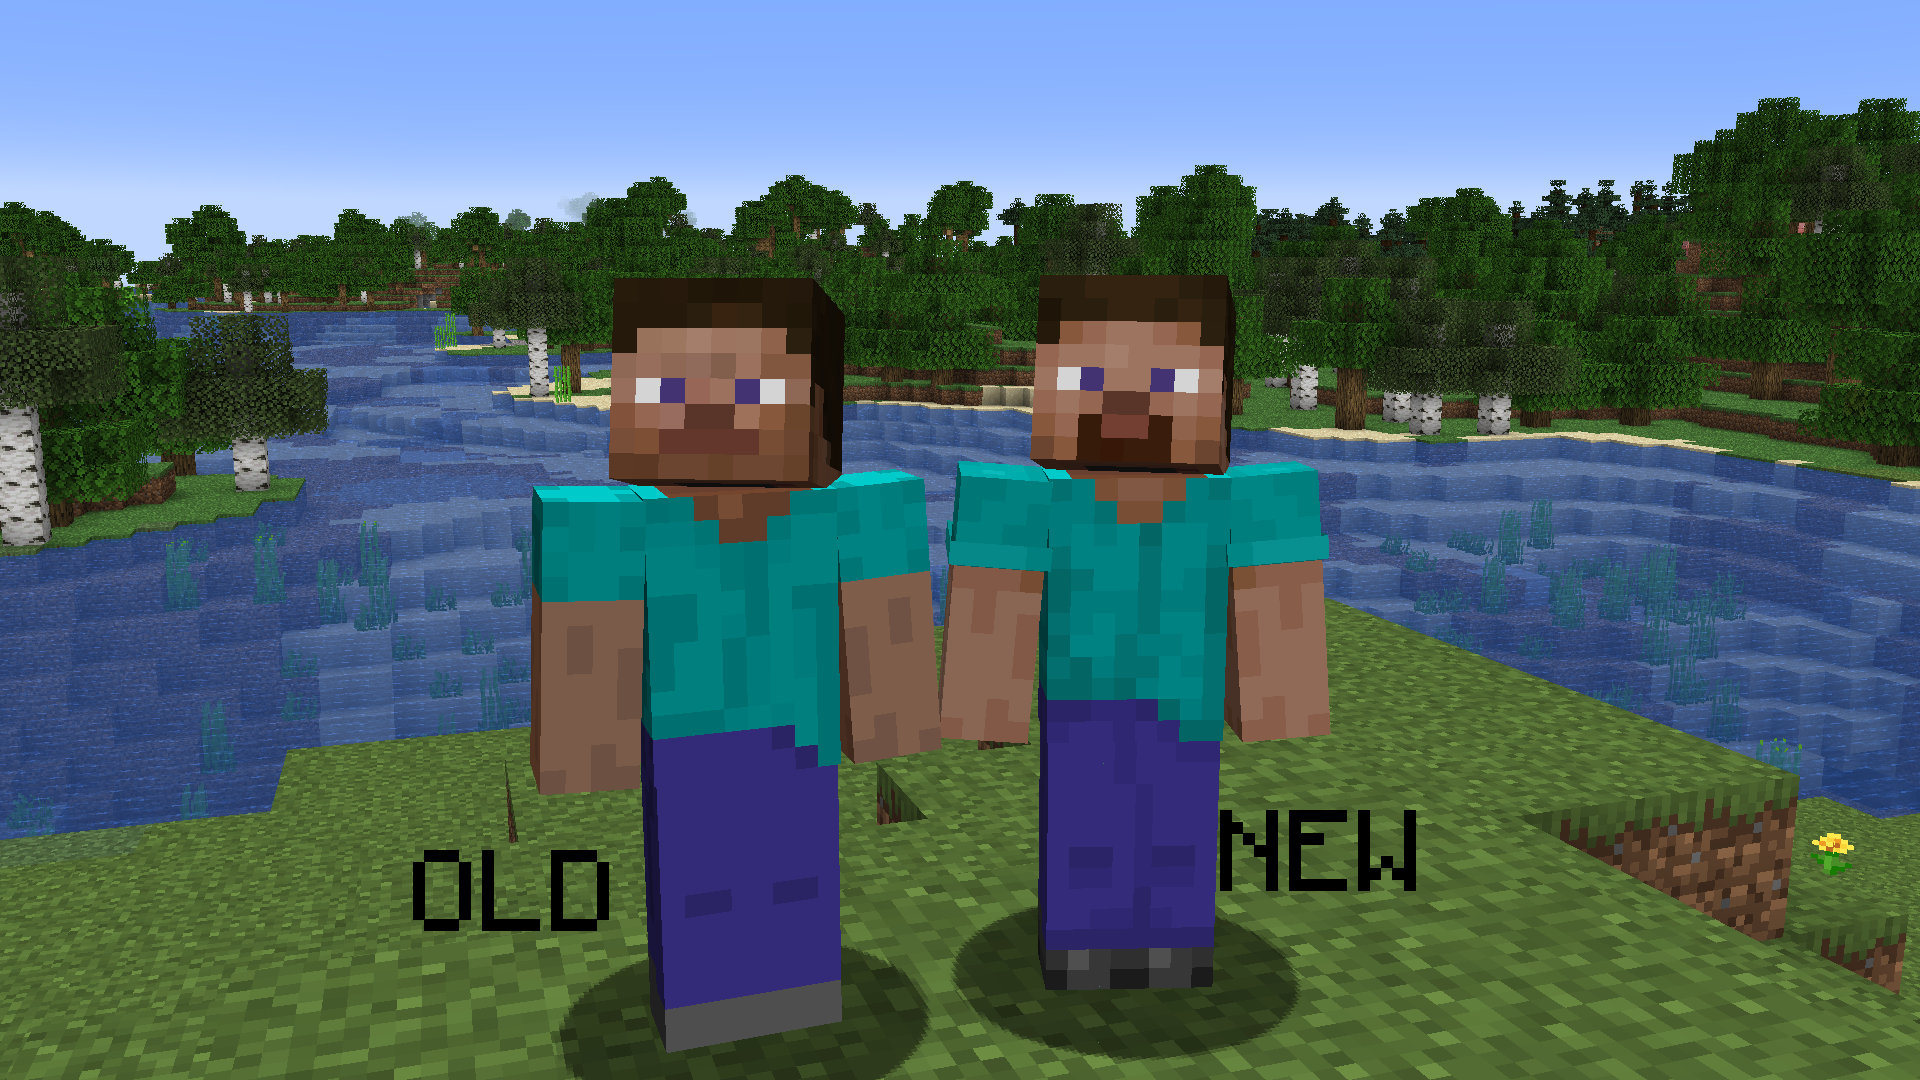 A Minecraft Steve comparison picture.